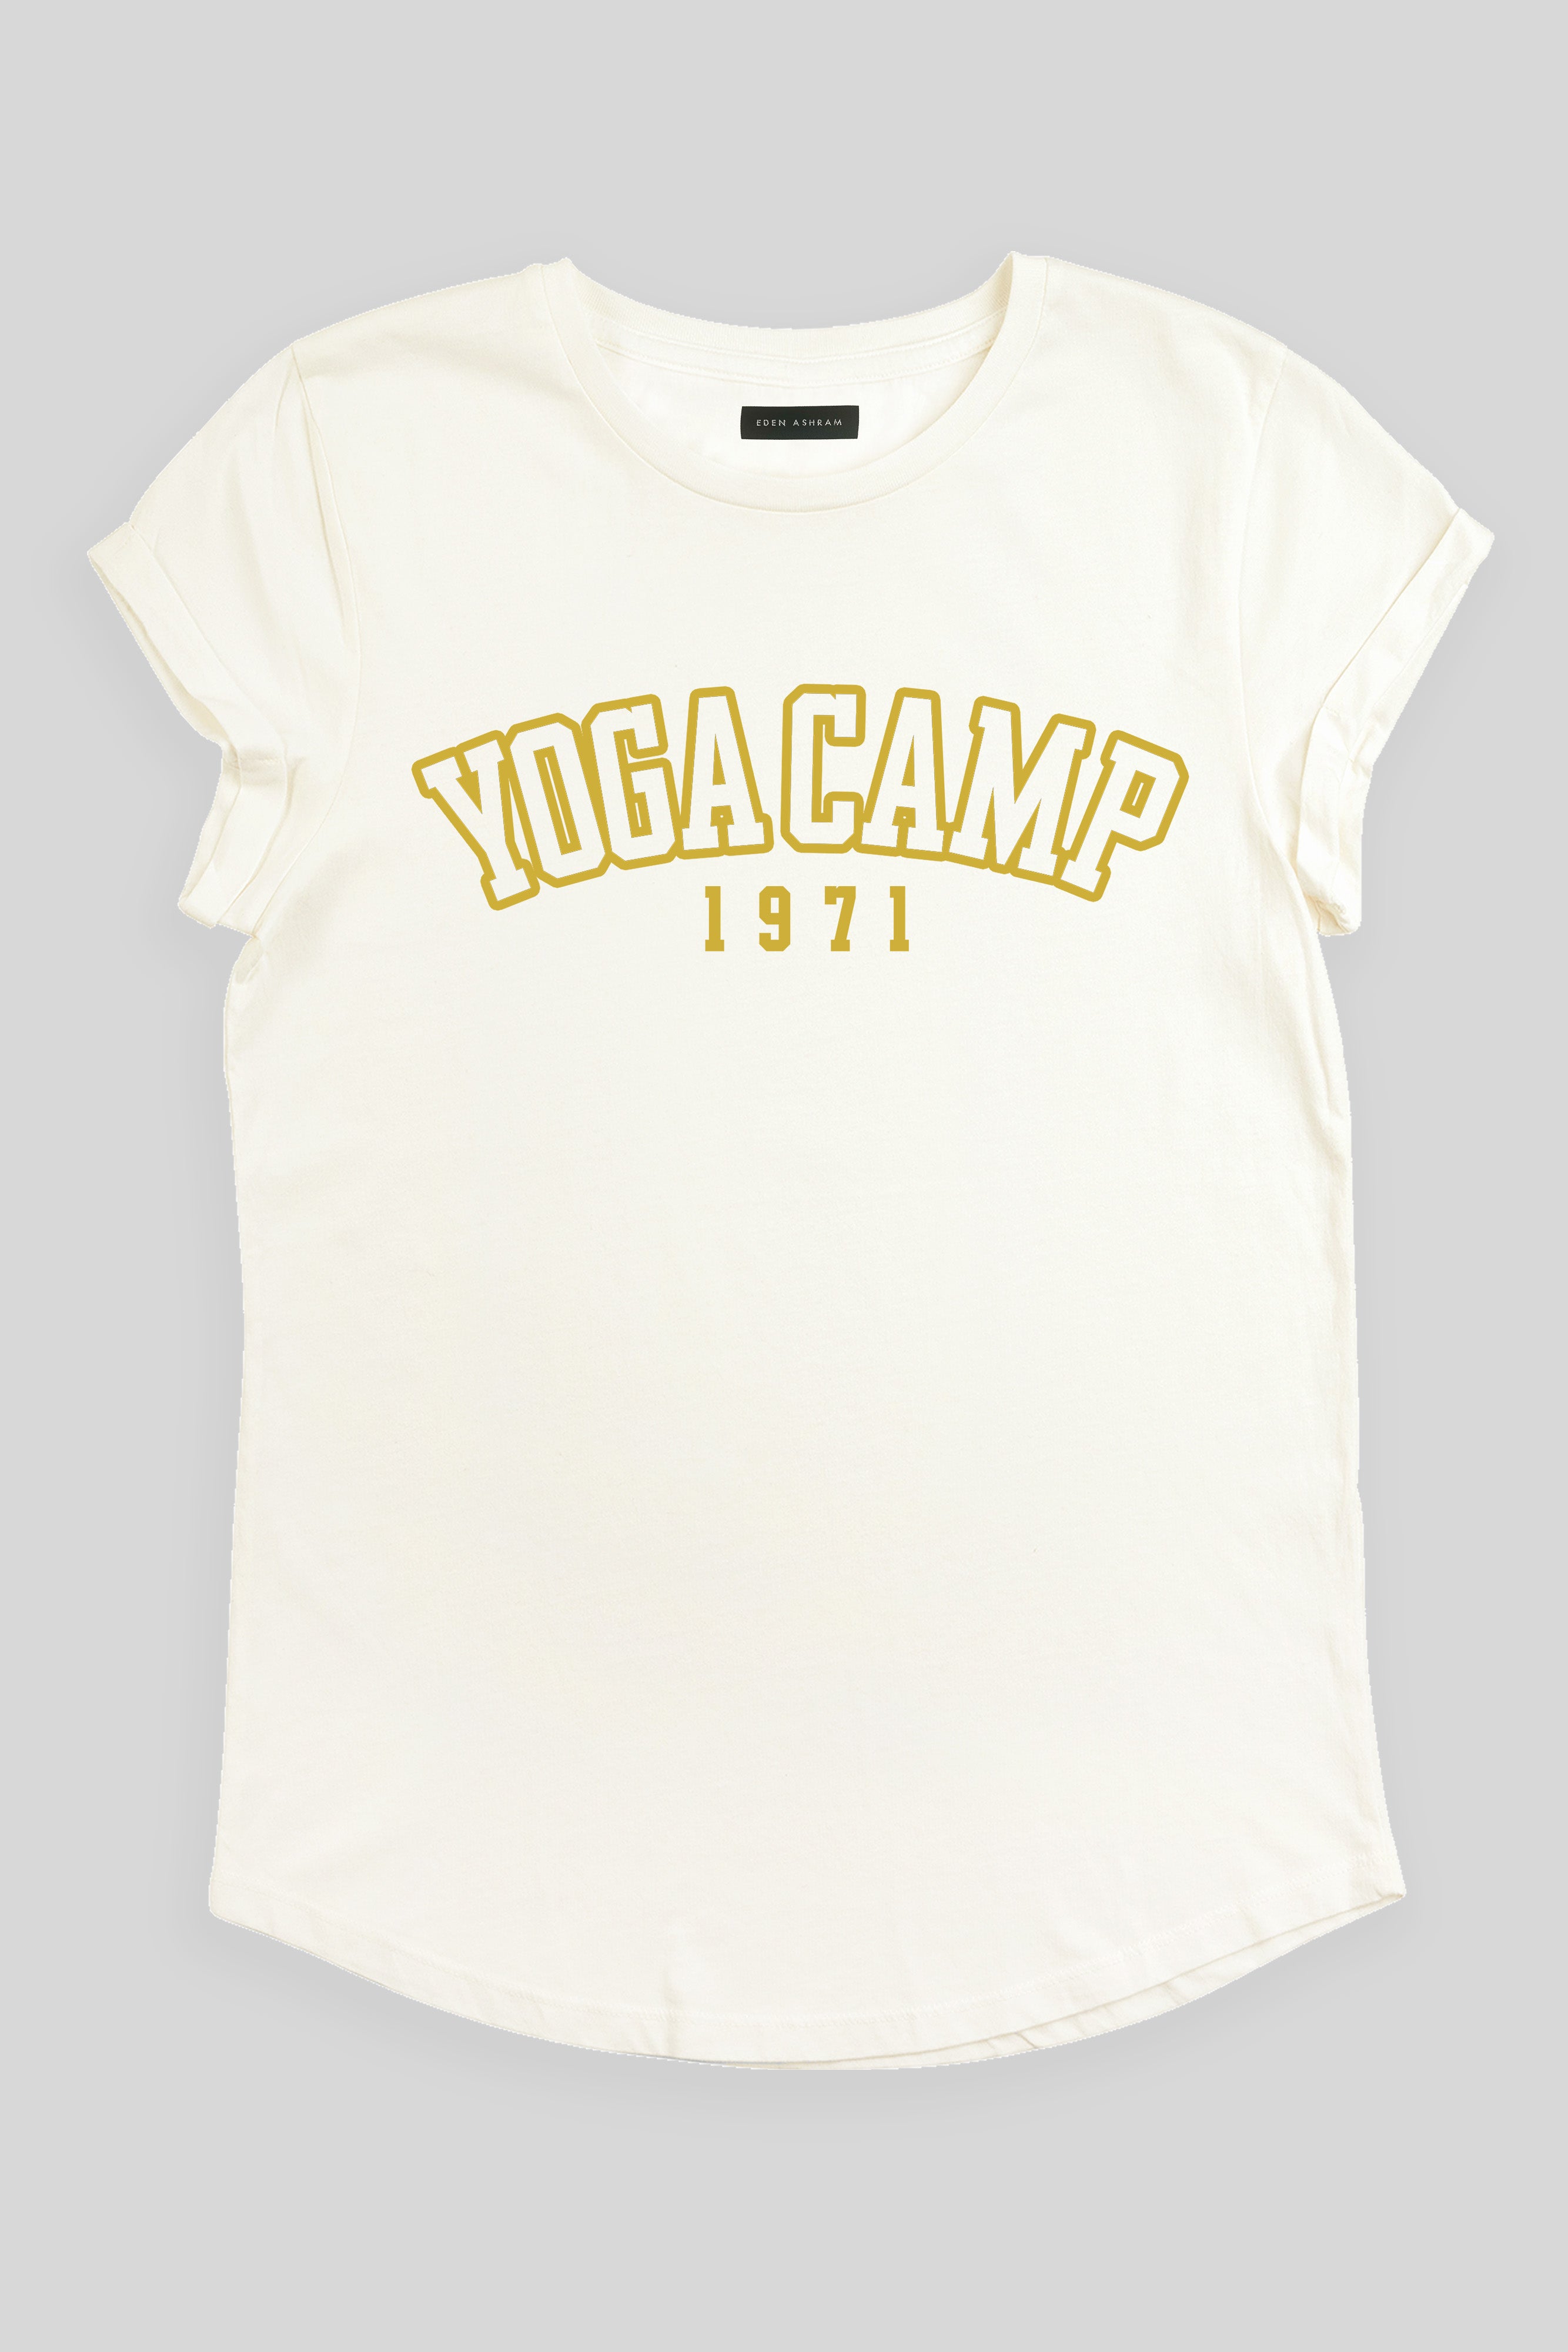 EDEN ASHRAM Yoga Camp 1971 Rolled Sleeve T-Shirt Stonewash White